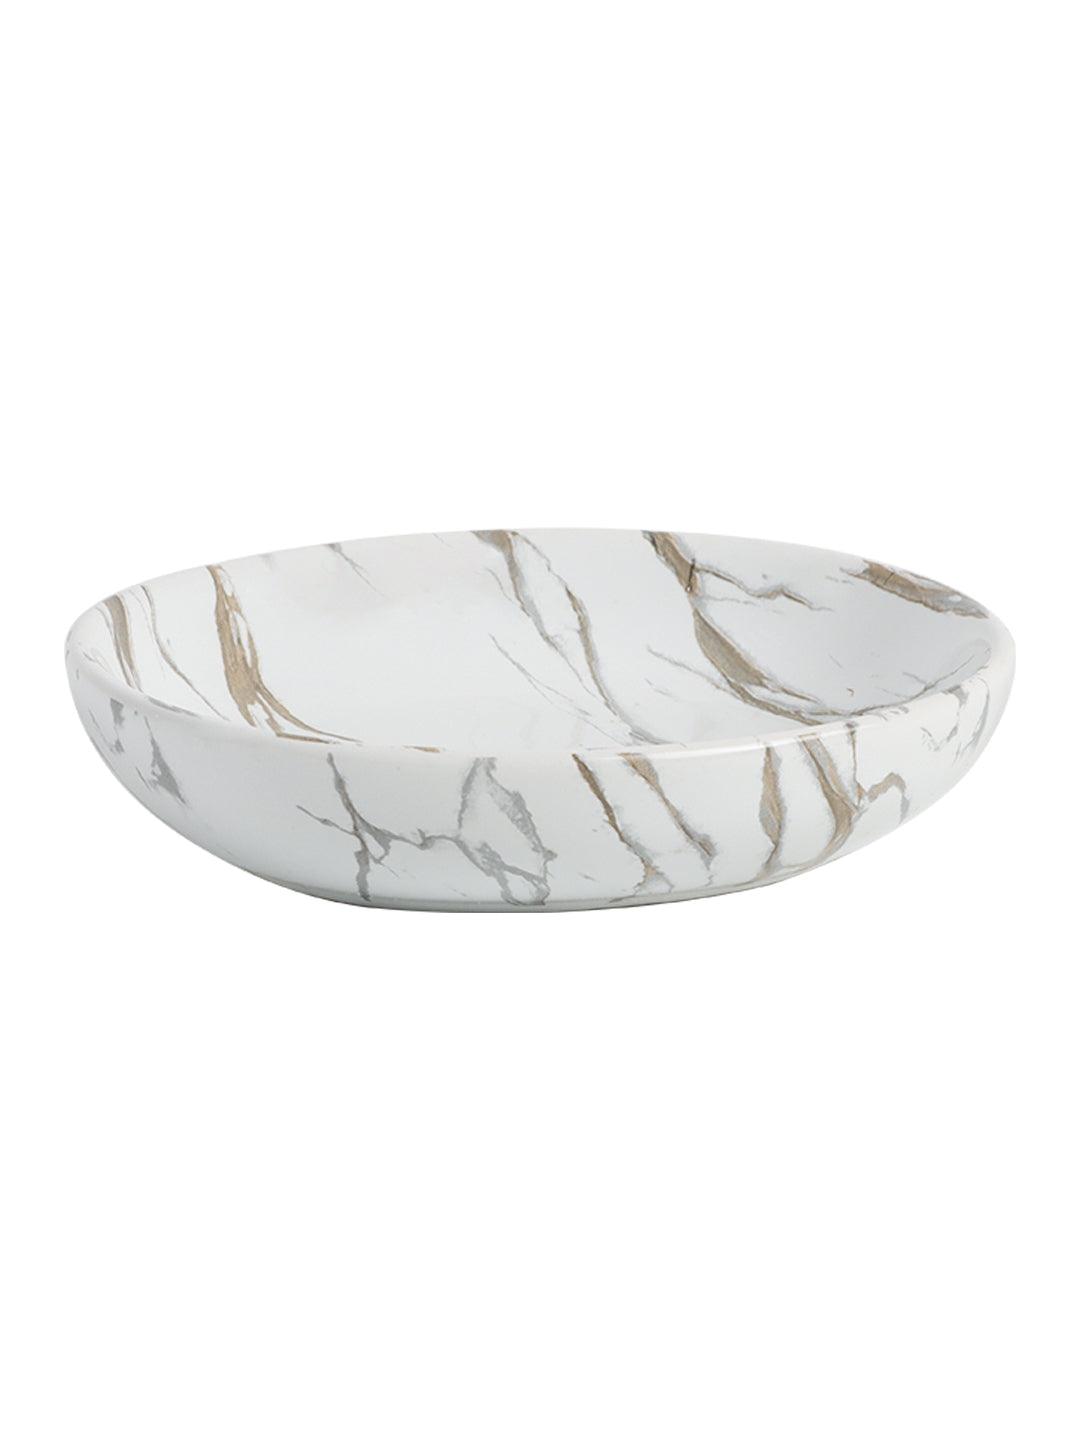 White Ceramic Bathroom Set Of 4 - Stone Finish, Bath Accessories - MARKET99